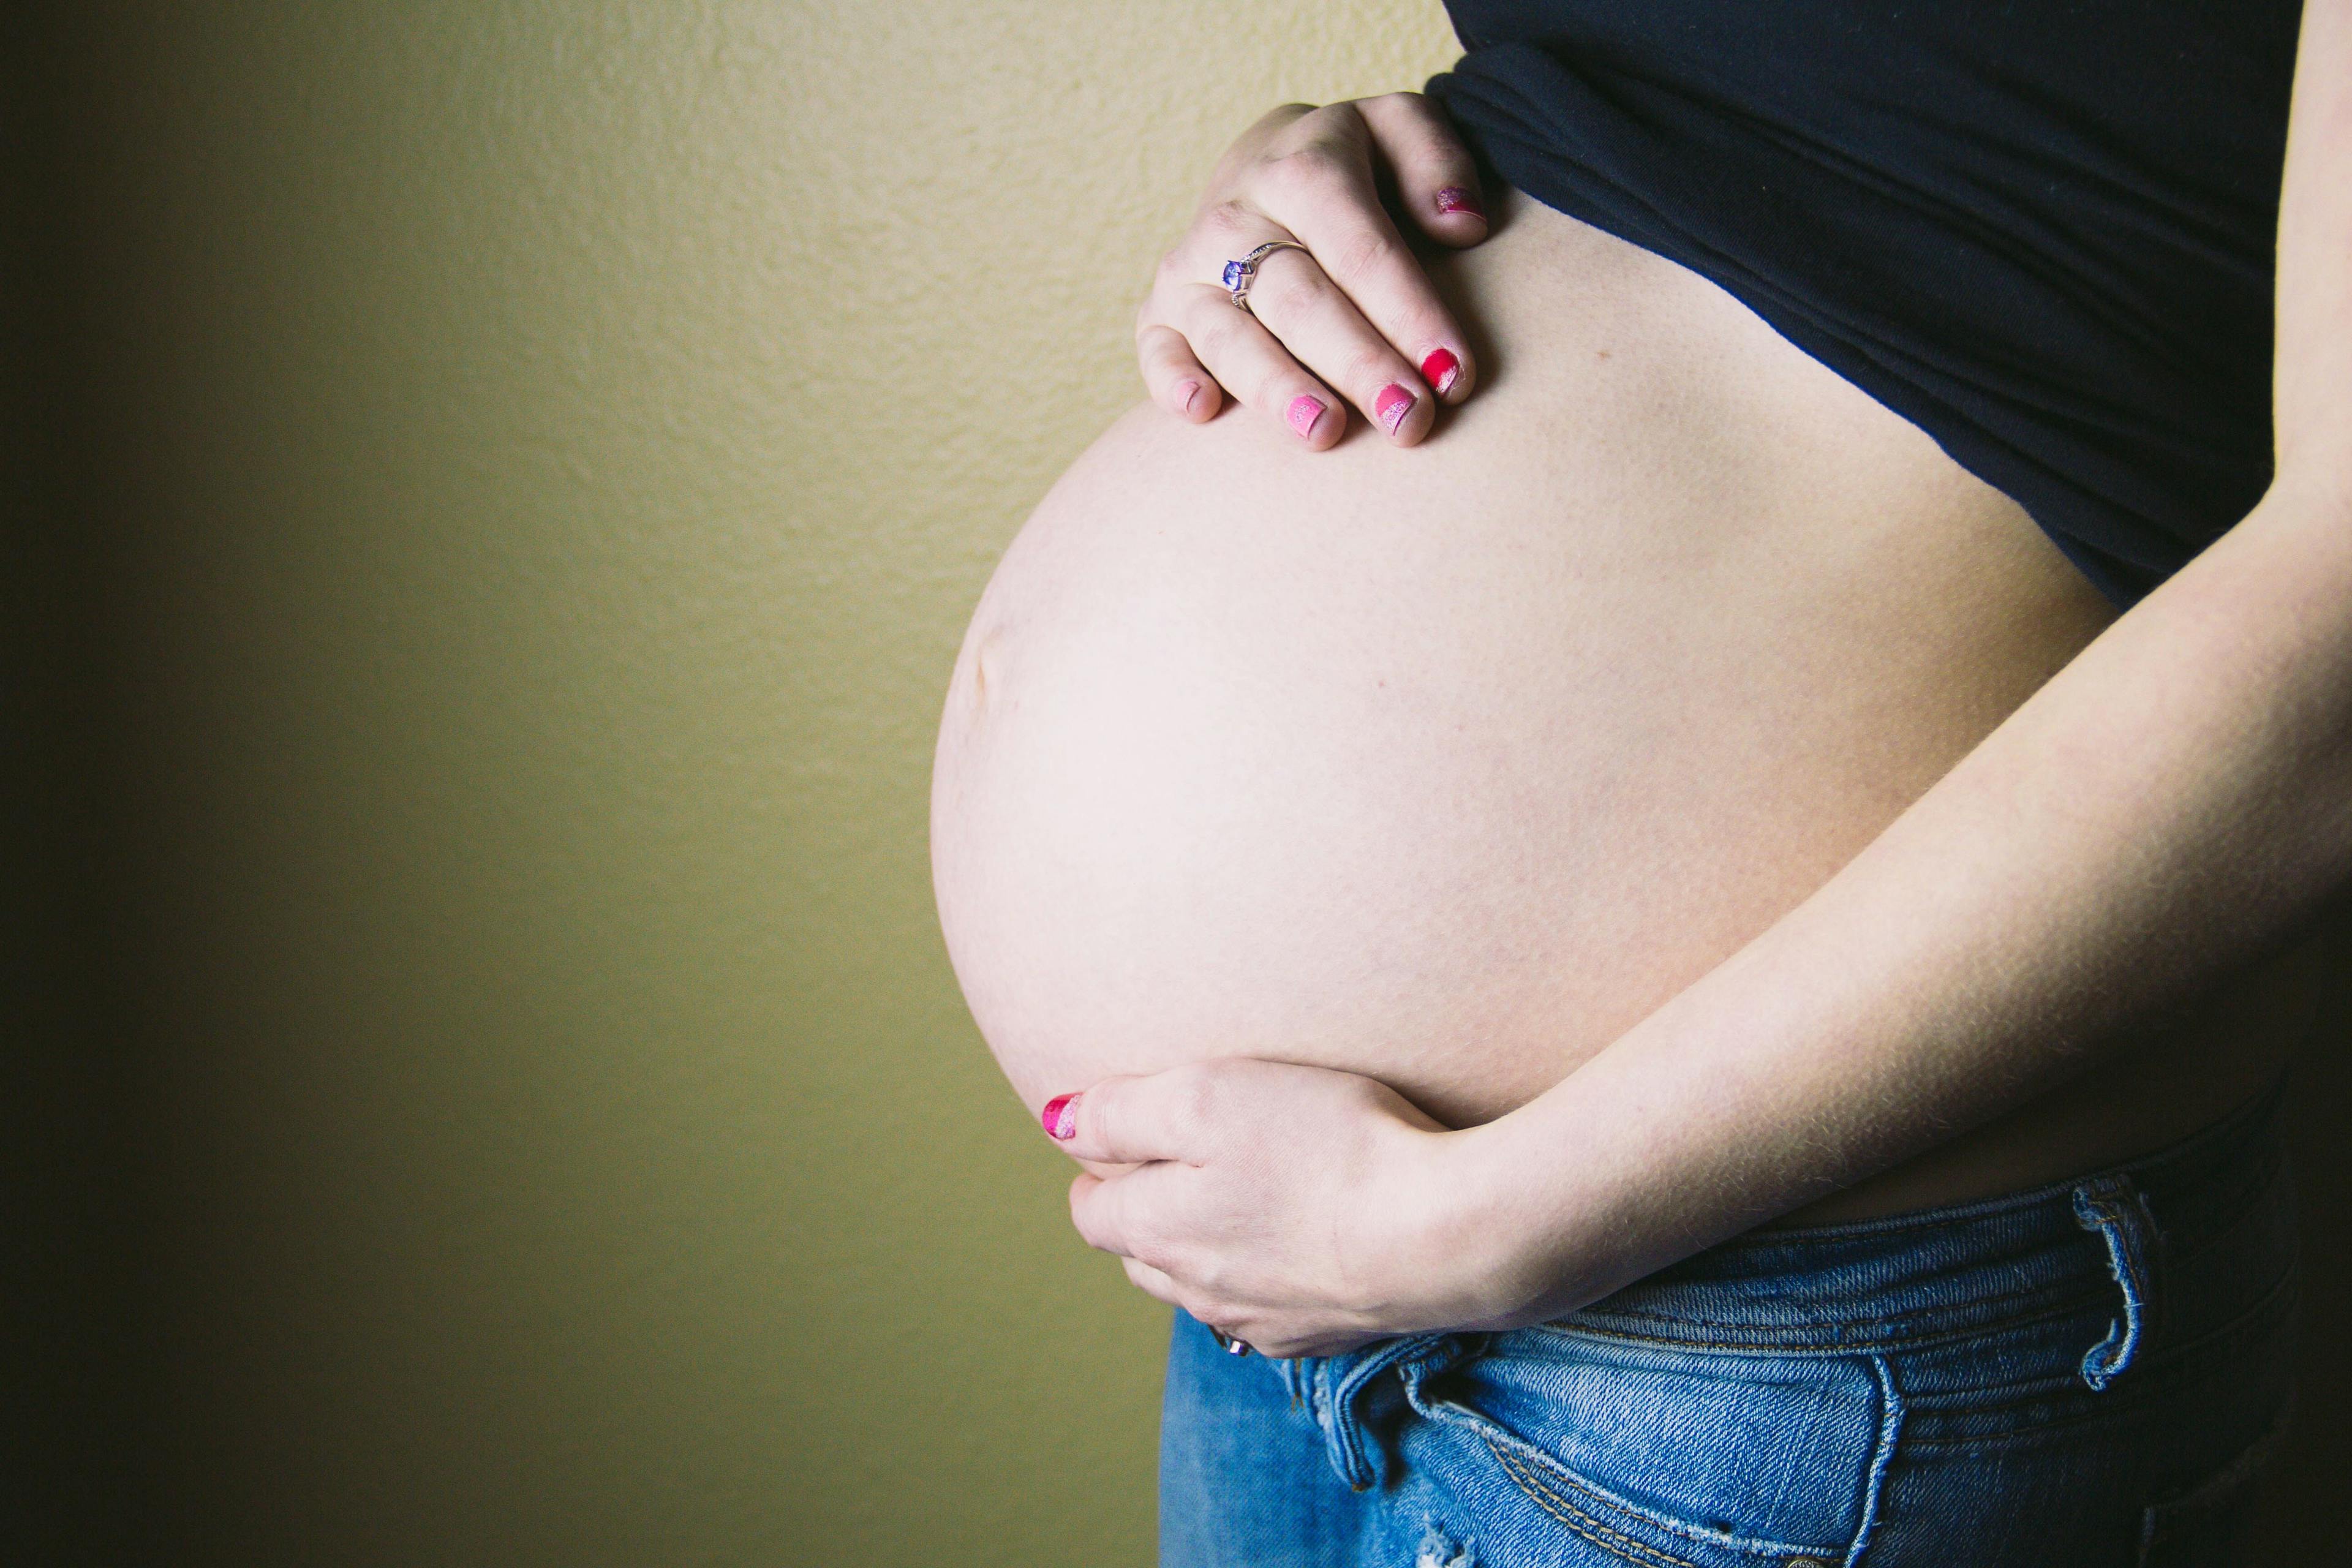 Placental DNA may predict pregnancy complications